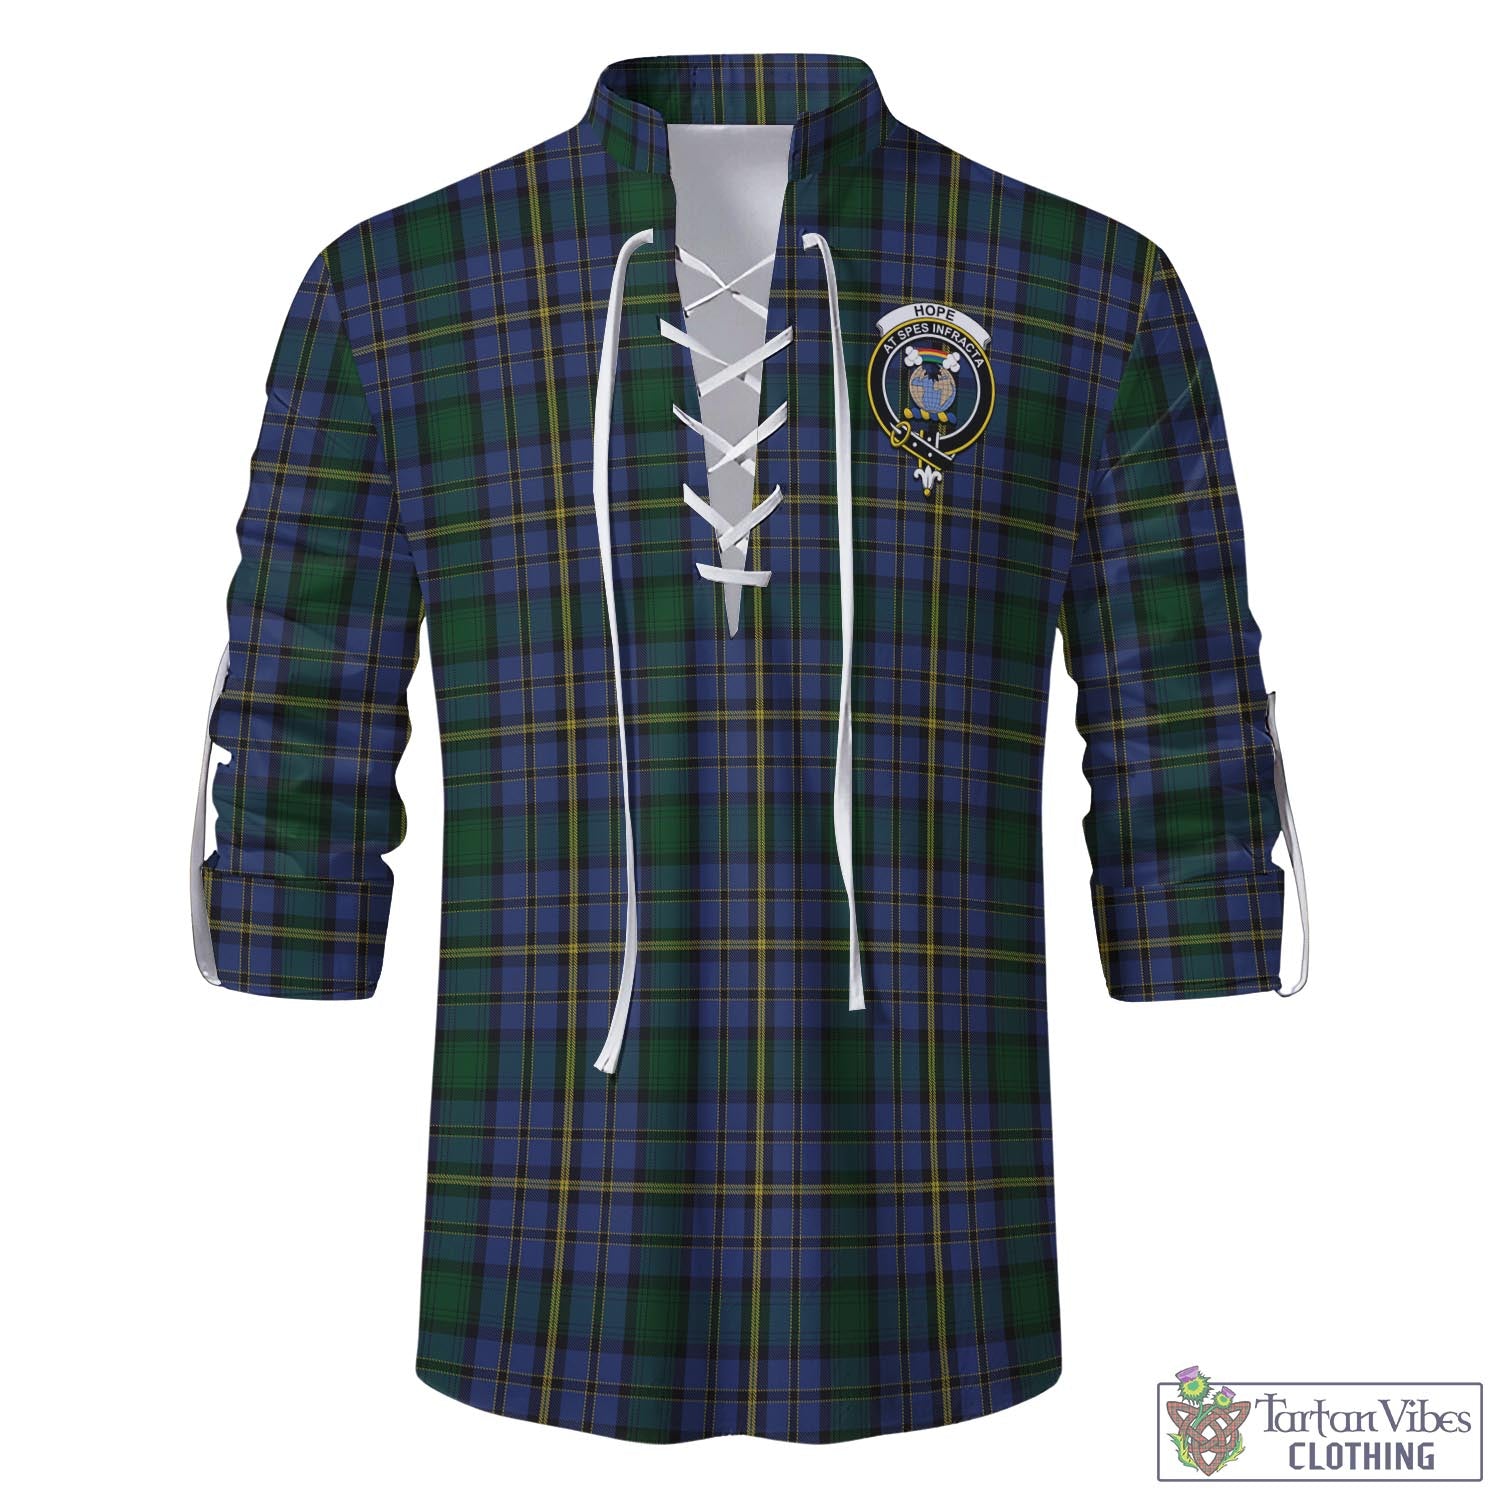 Tartan Vibes Clothing Hope Clan Originaux Tartan Men's Scottish Traditional Jacobite Ghillie Kilt Shirt with Family Crest